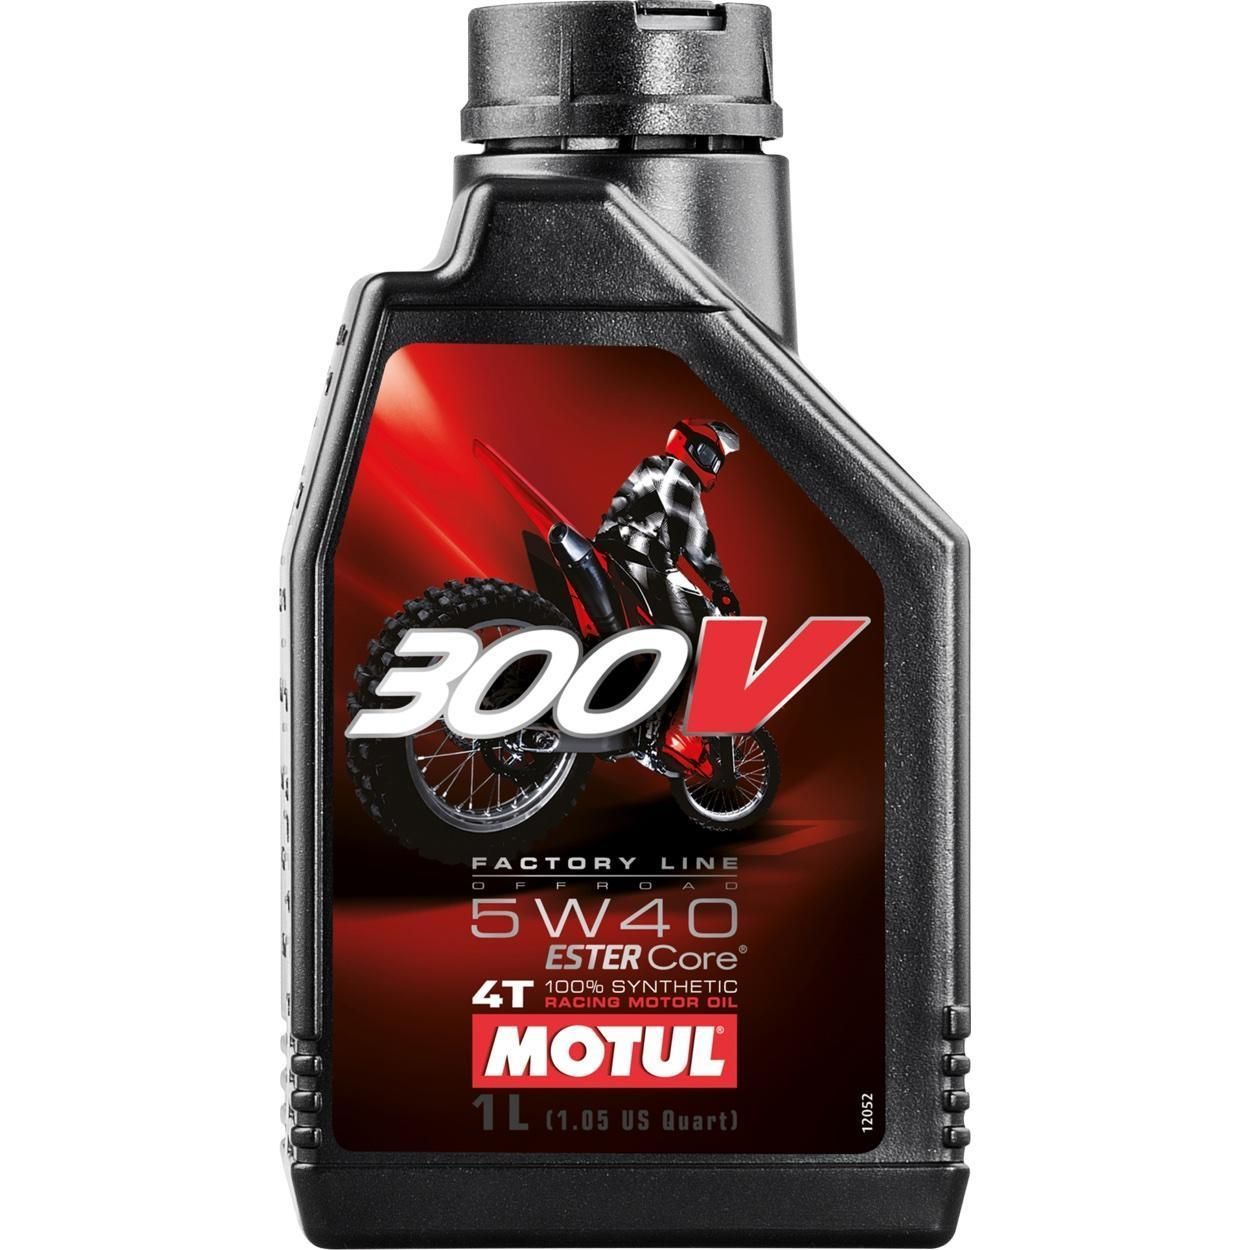 Моторное масло MOTUL 300V 4T FACTORY LINE OFF ROAD SAE 5W-40, 1л 5W40 (845611 / 104134)